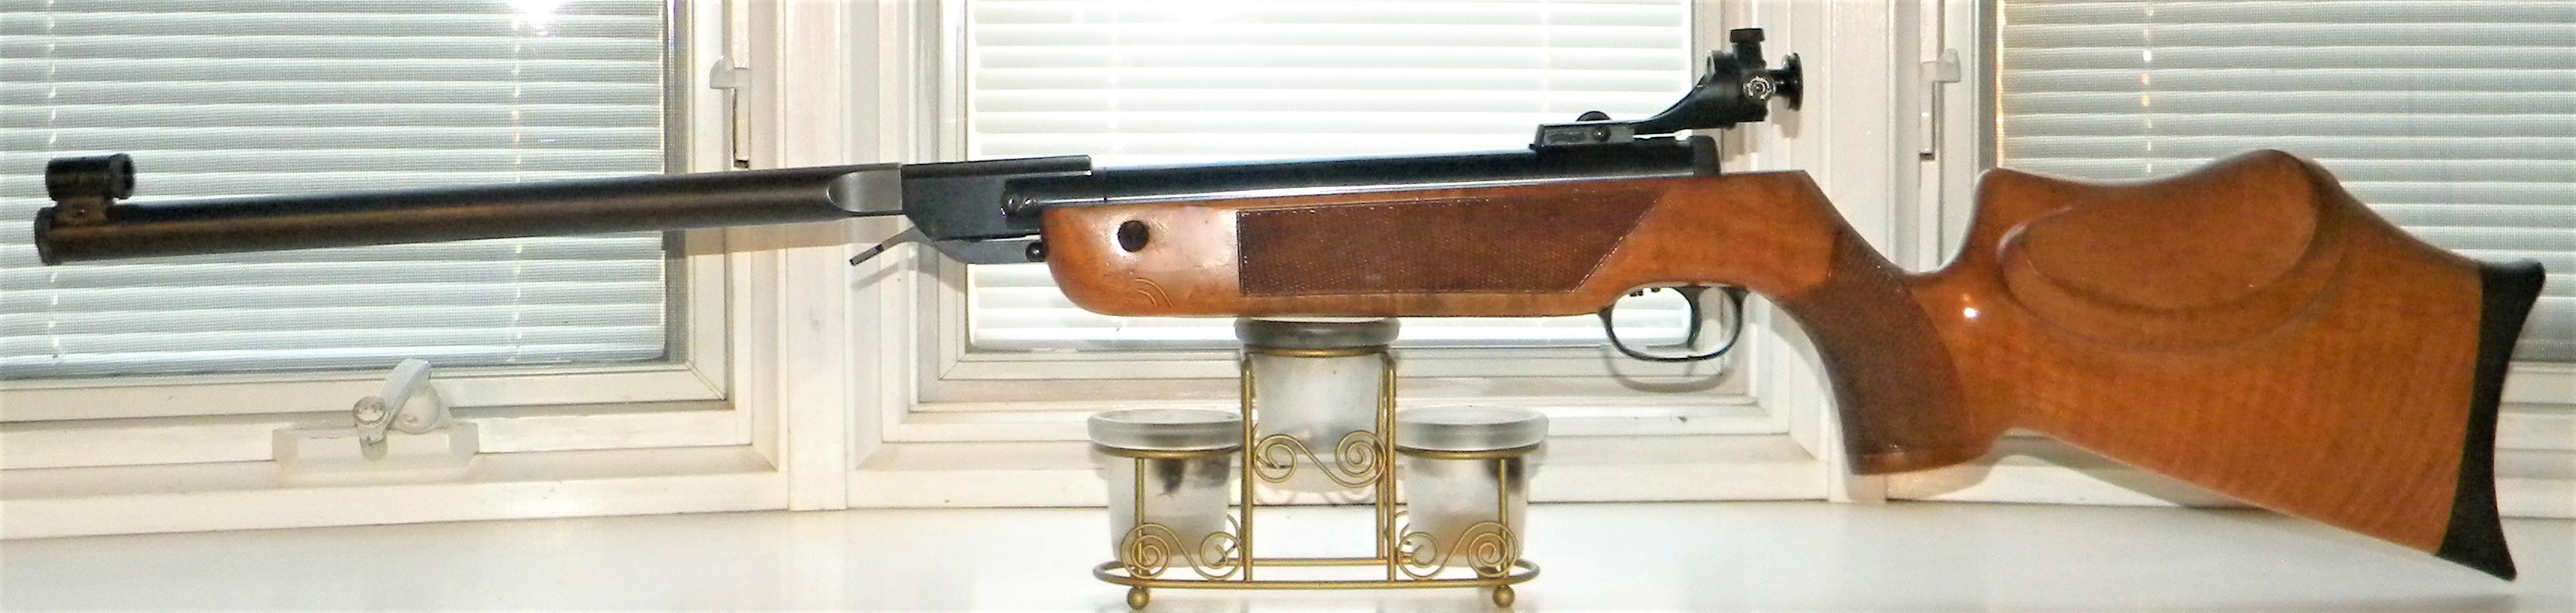 308 Walther LGV Tyrolean .177.JPG